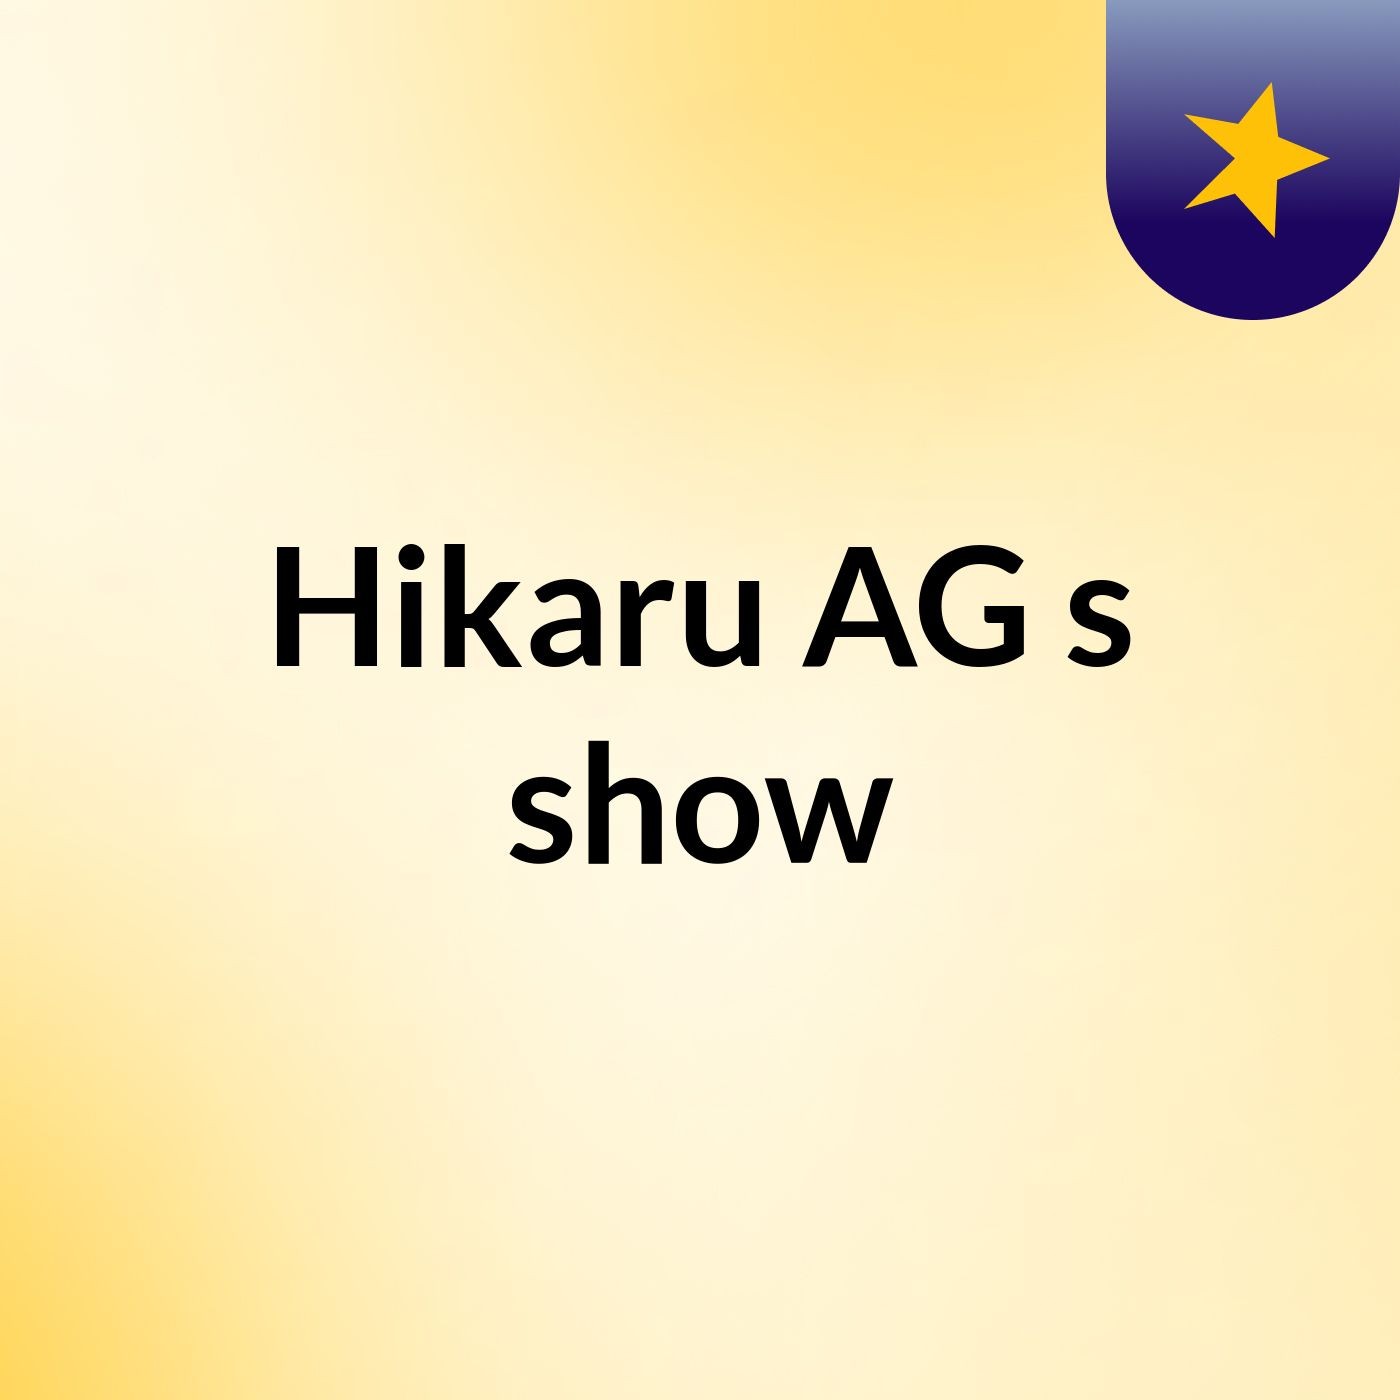 Hikaru AG's show